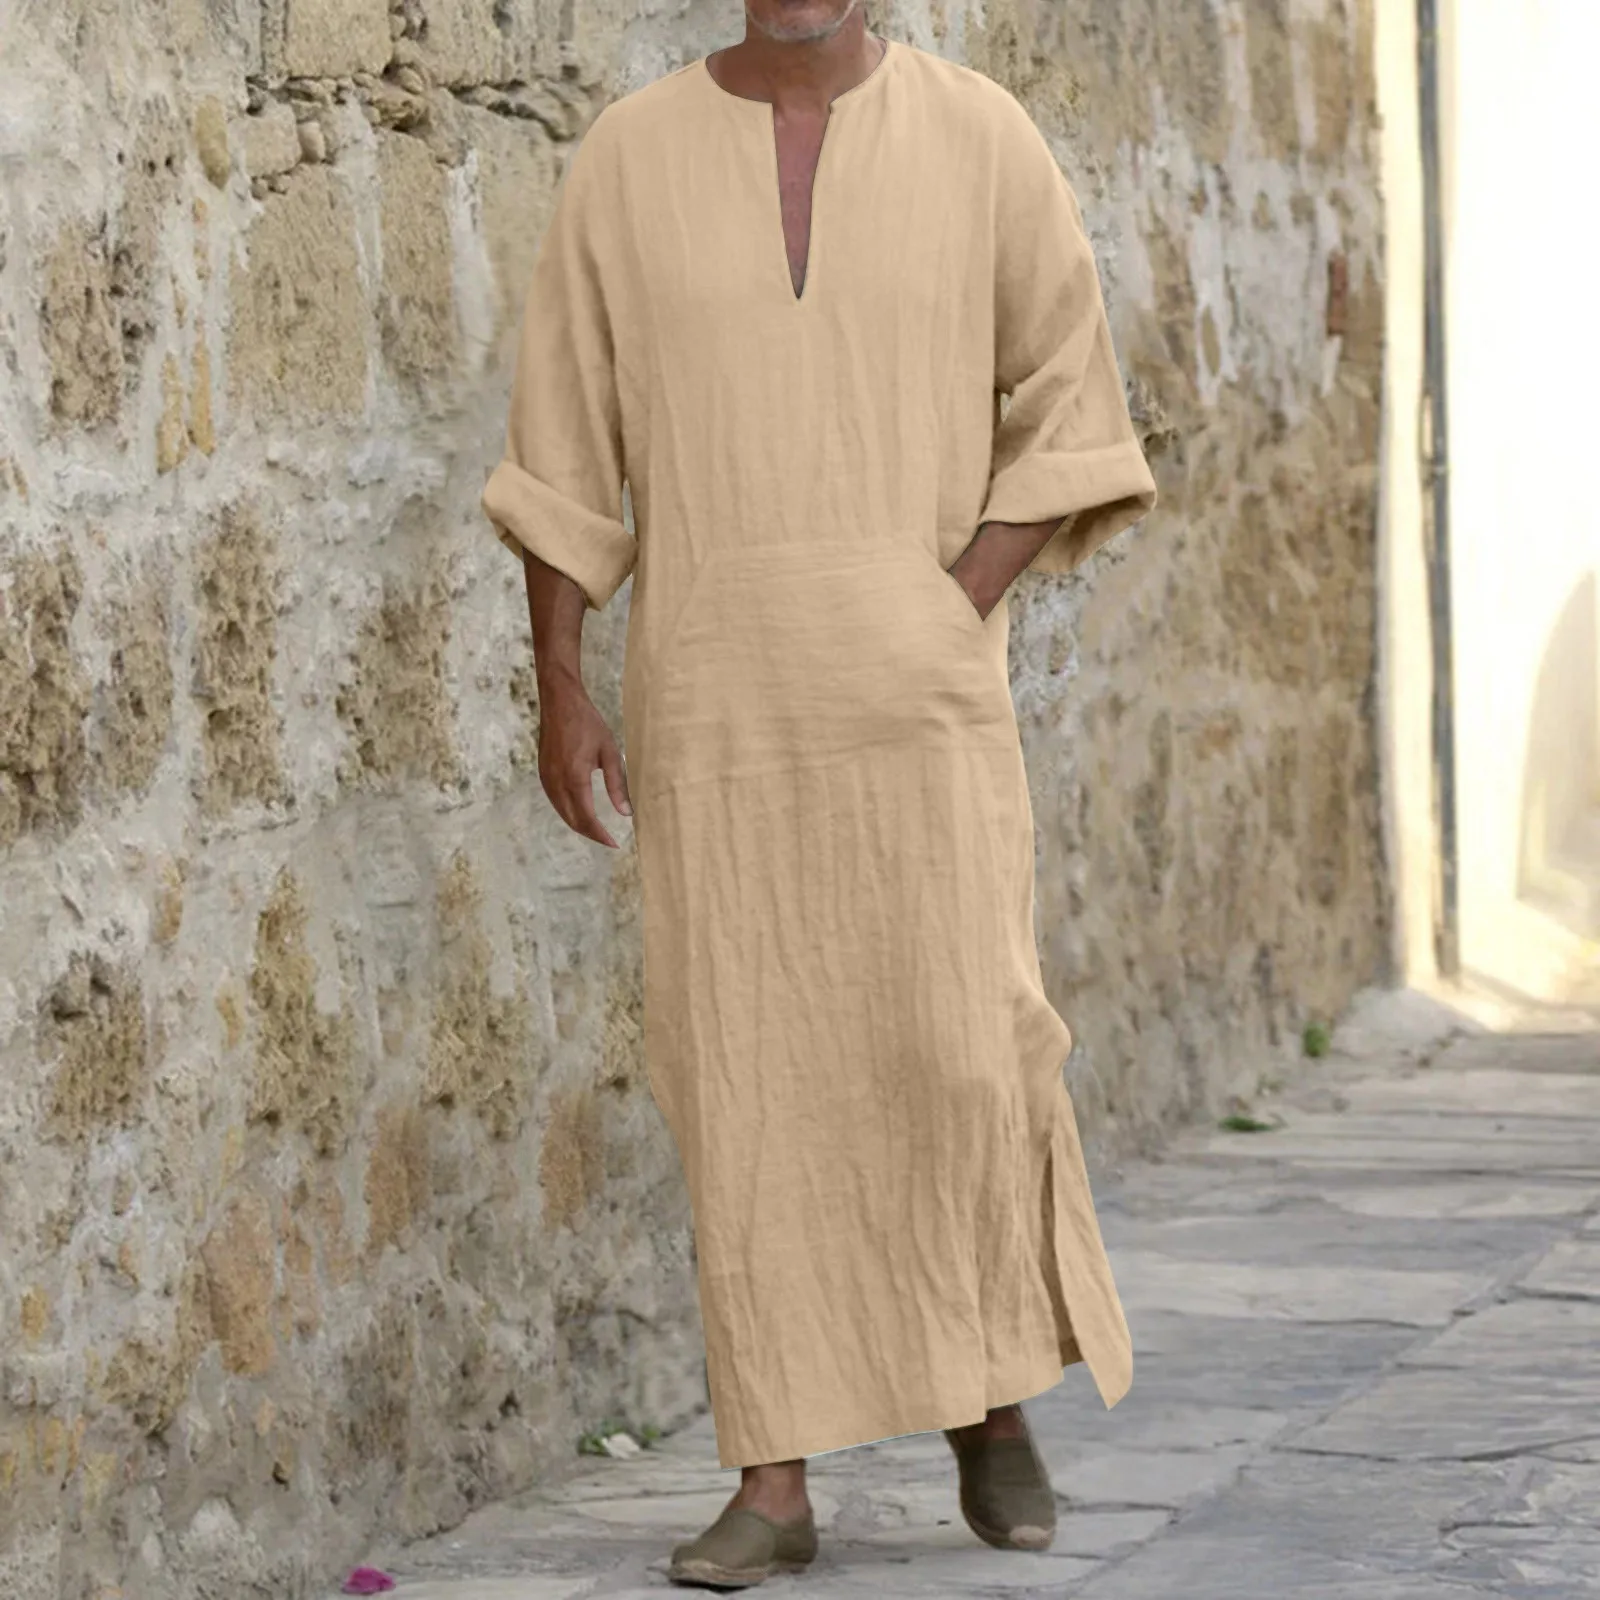 Men's Muslim Robe V-neck Casual Pockets Loose Long Sleeve Vintage Arab Ethnic Islamic Dress Male Abaya Islamic Clothing